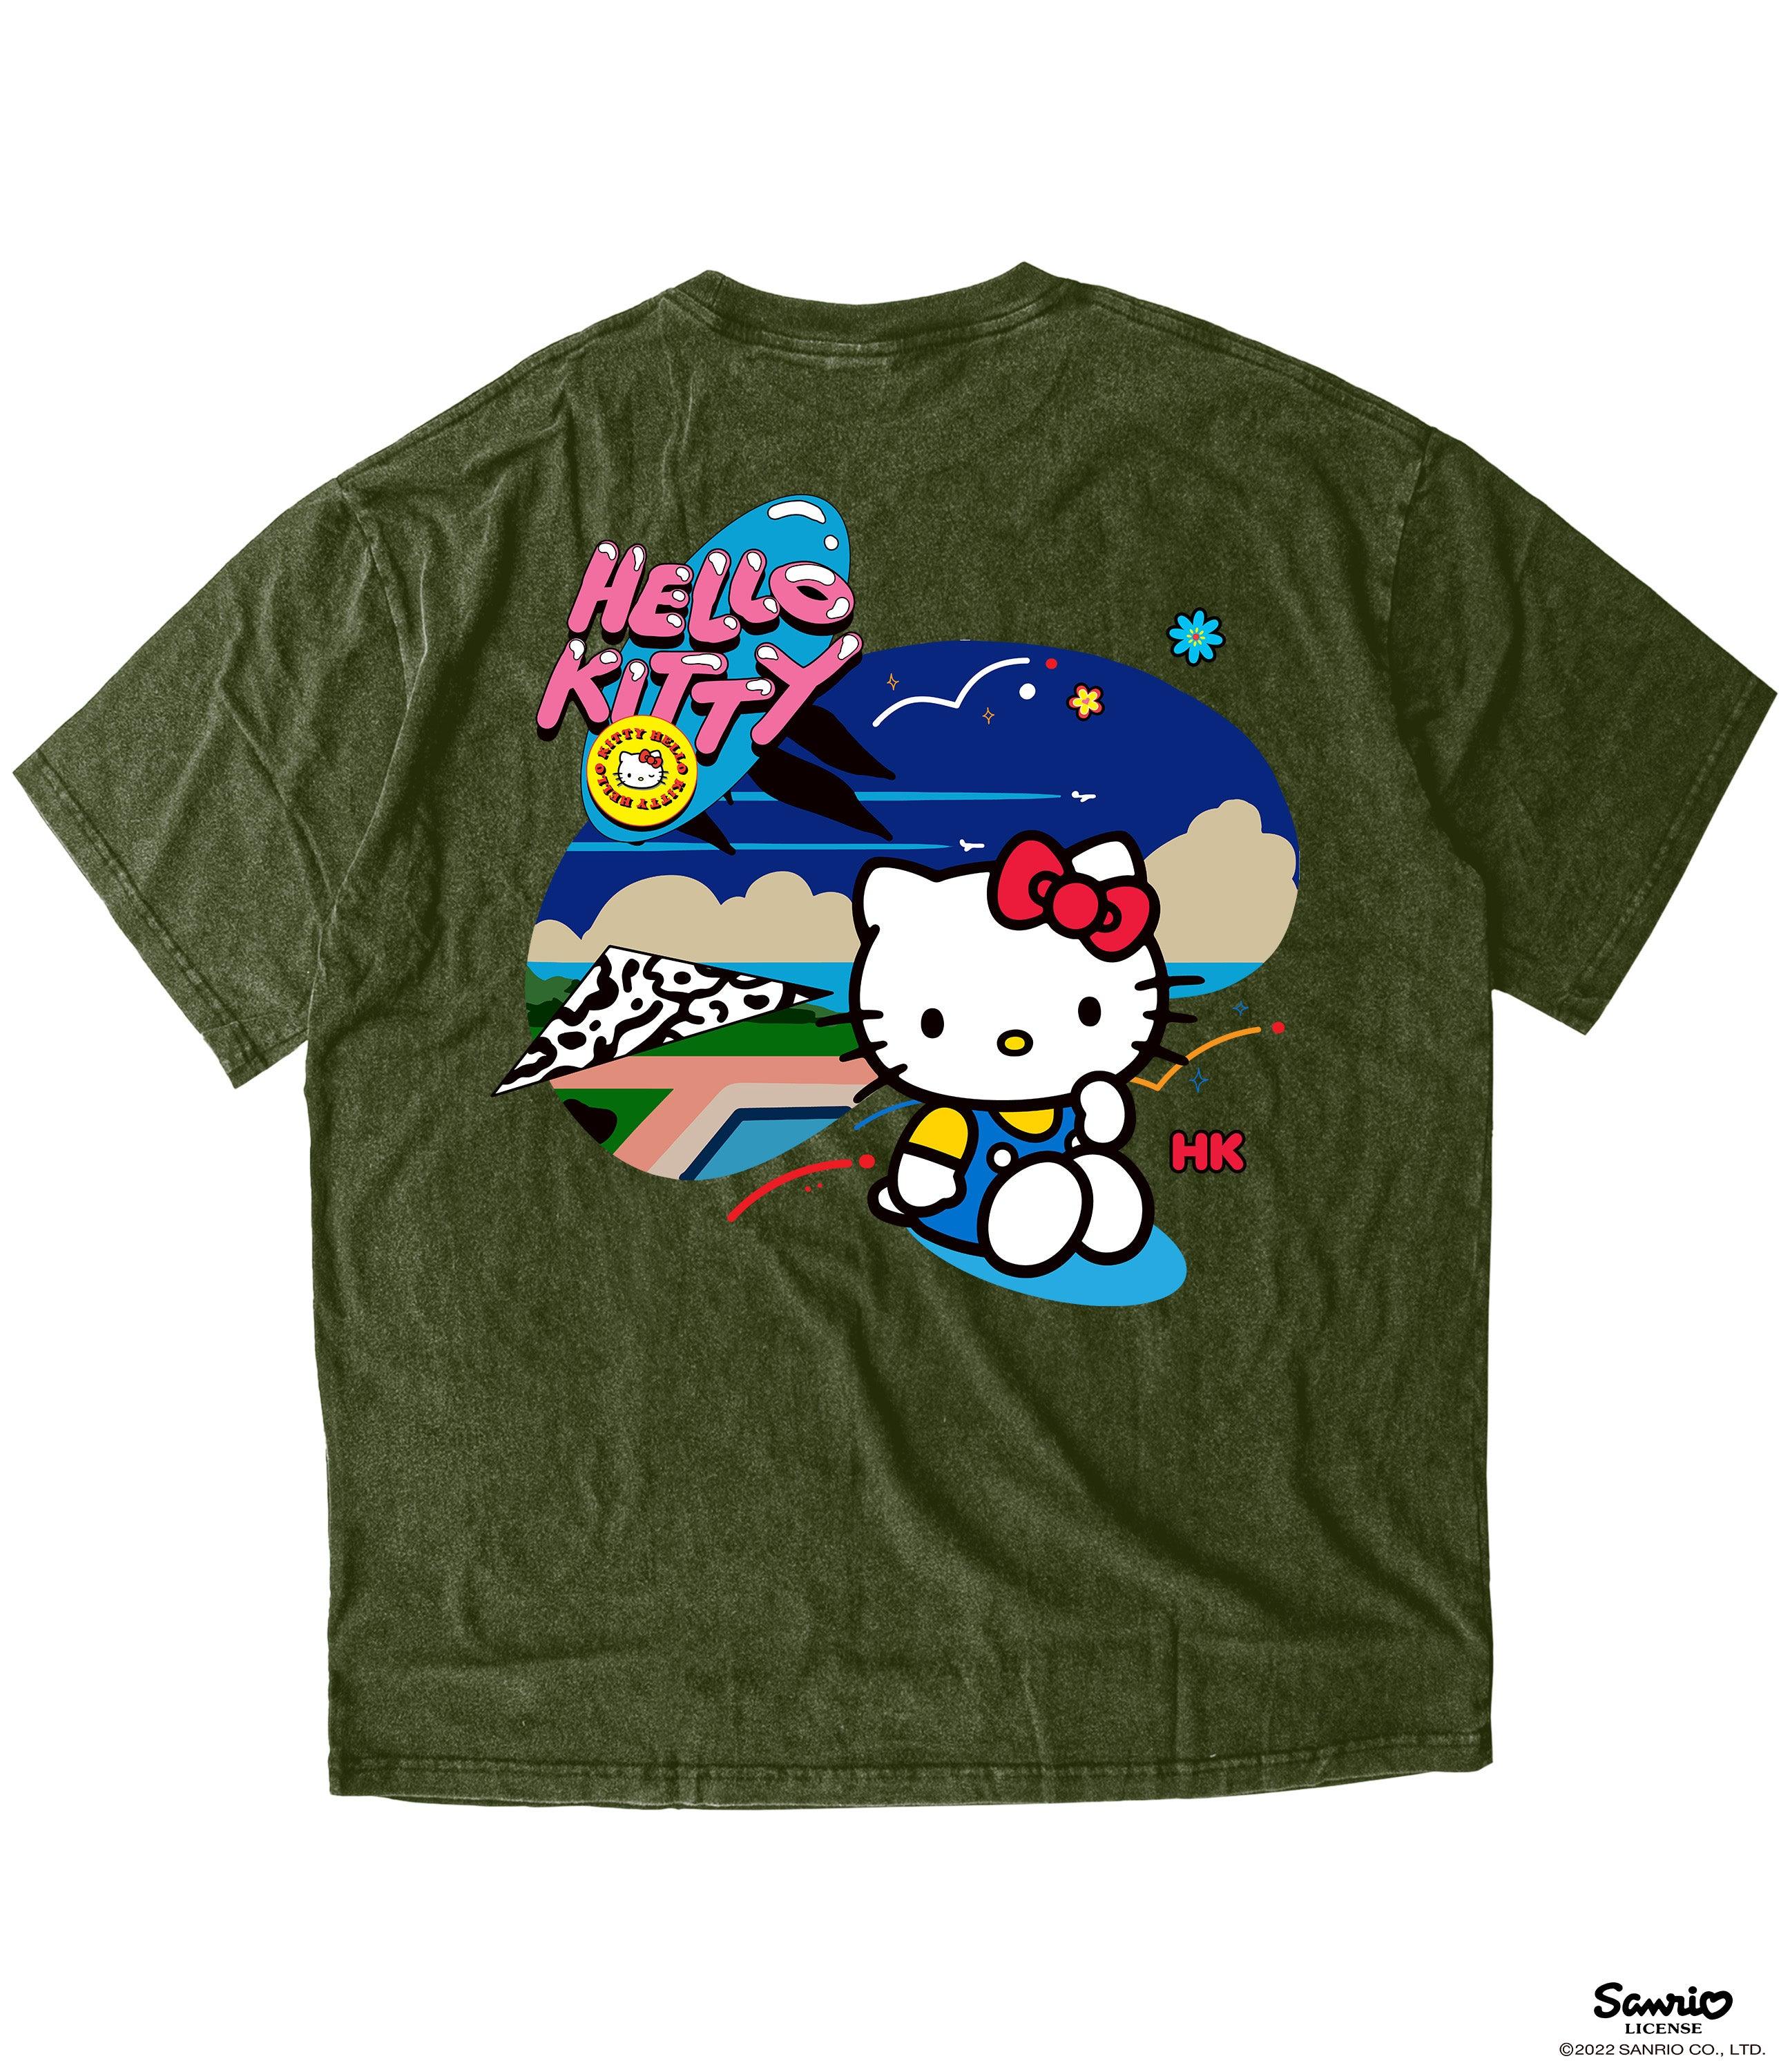 Beach Hello Kitty Vintage Tee at Catori Clothing | Graphic & Anime Tees, Hoodies & Sweatshirts 